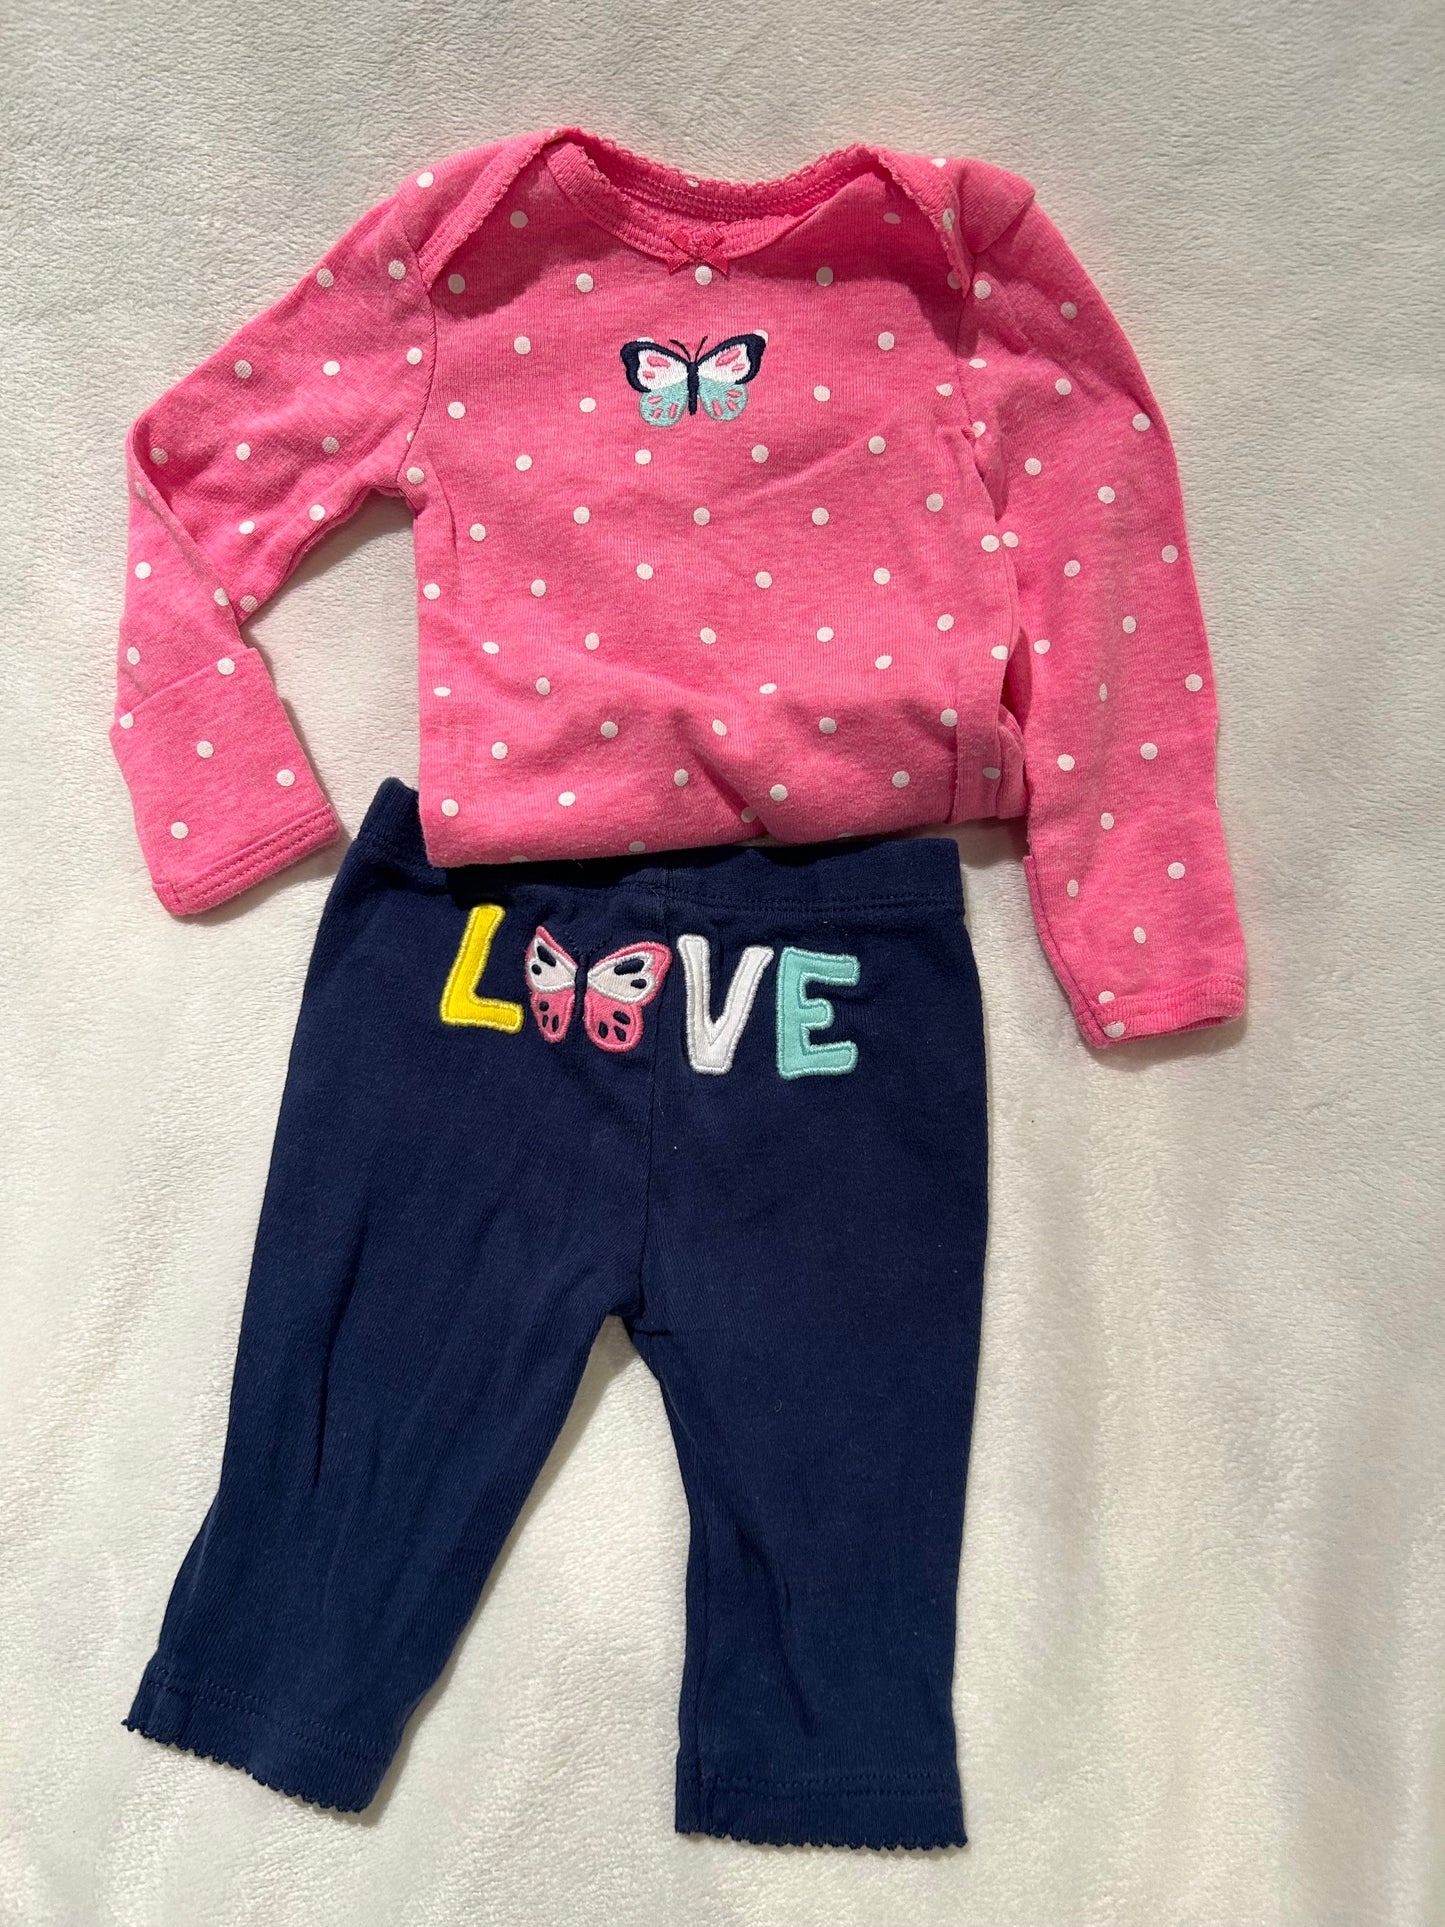 Carter's Girls Newborn pink onesie with navy blue pants